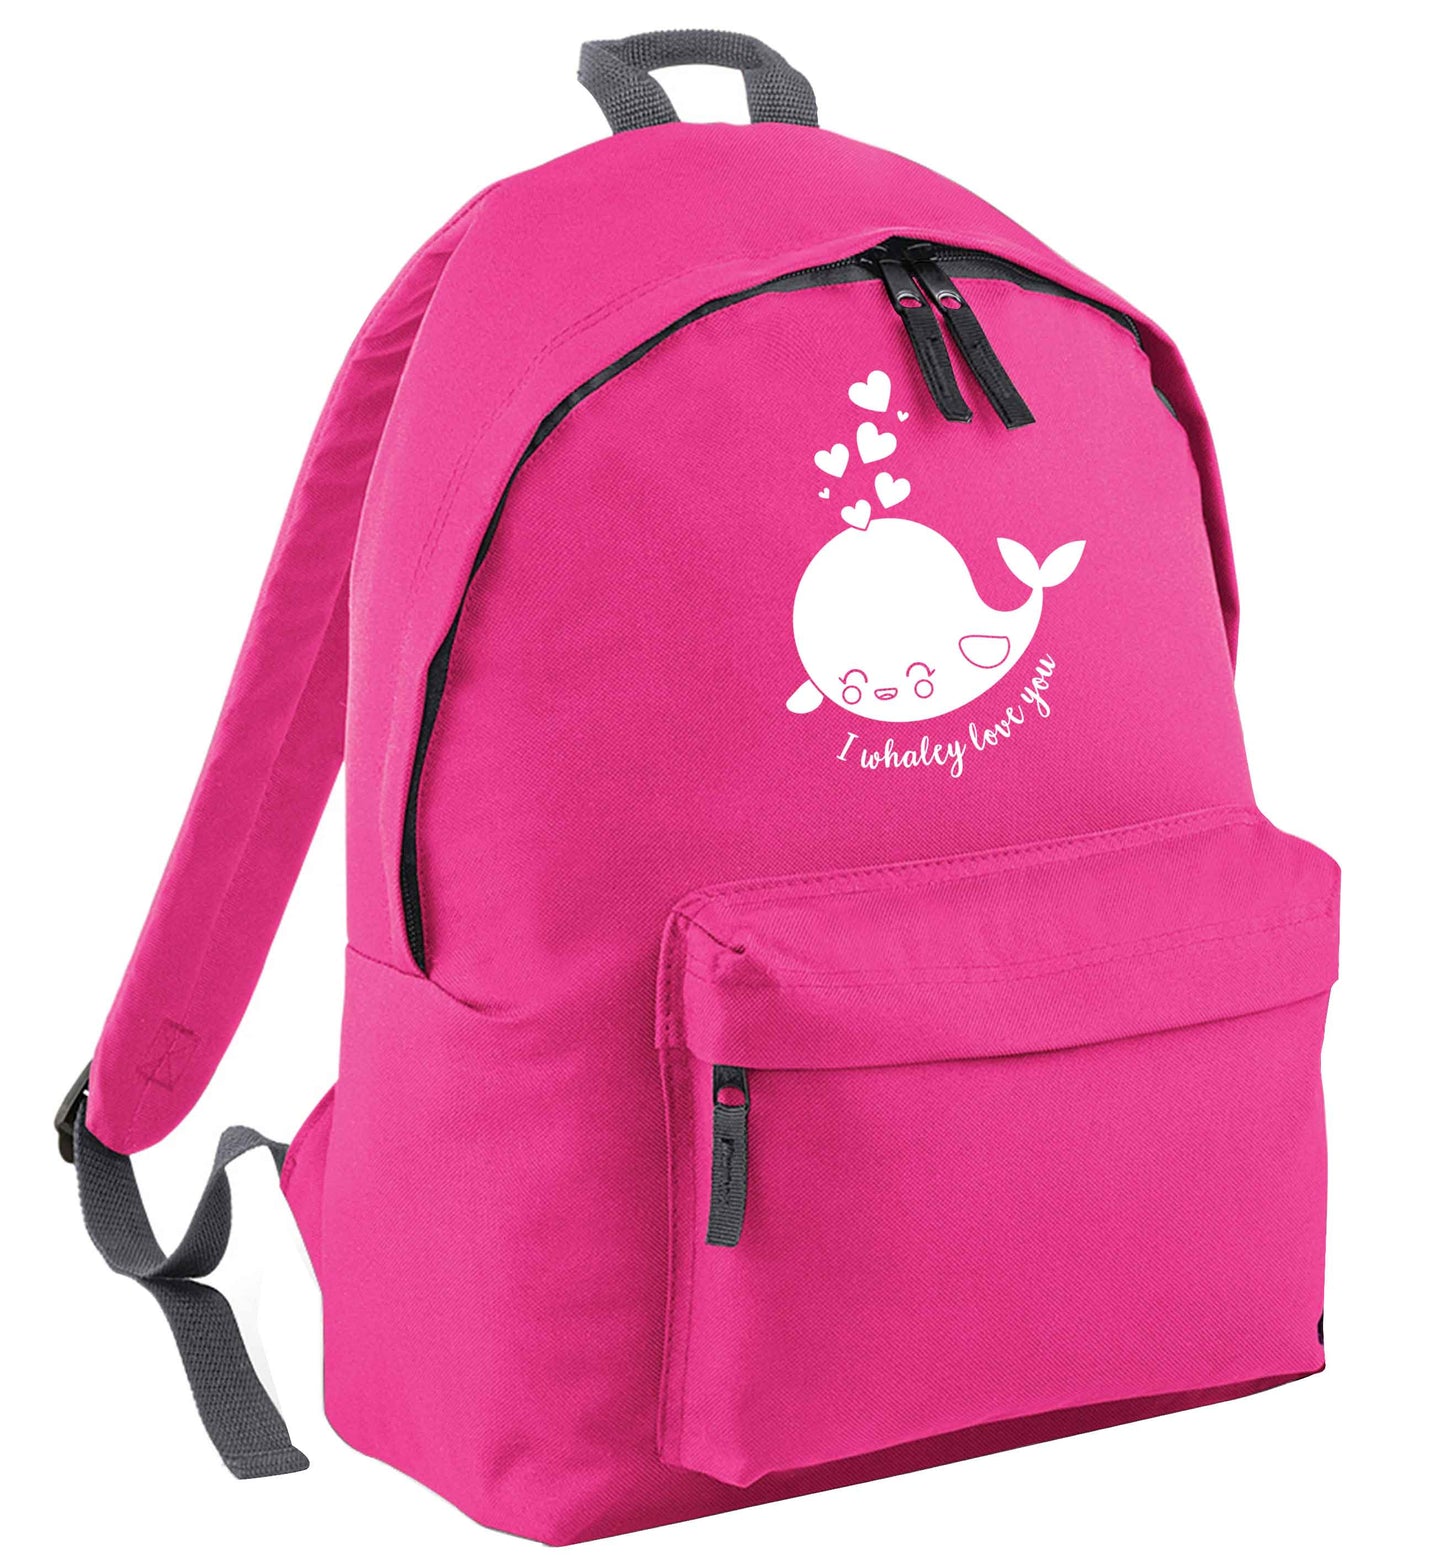 I whaley love you pink adults backpack